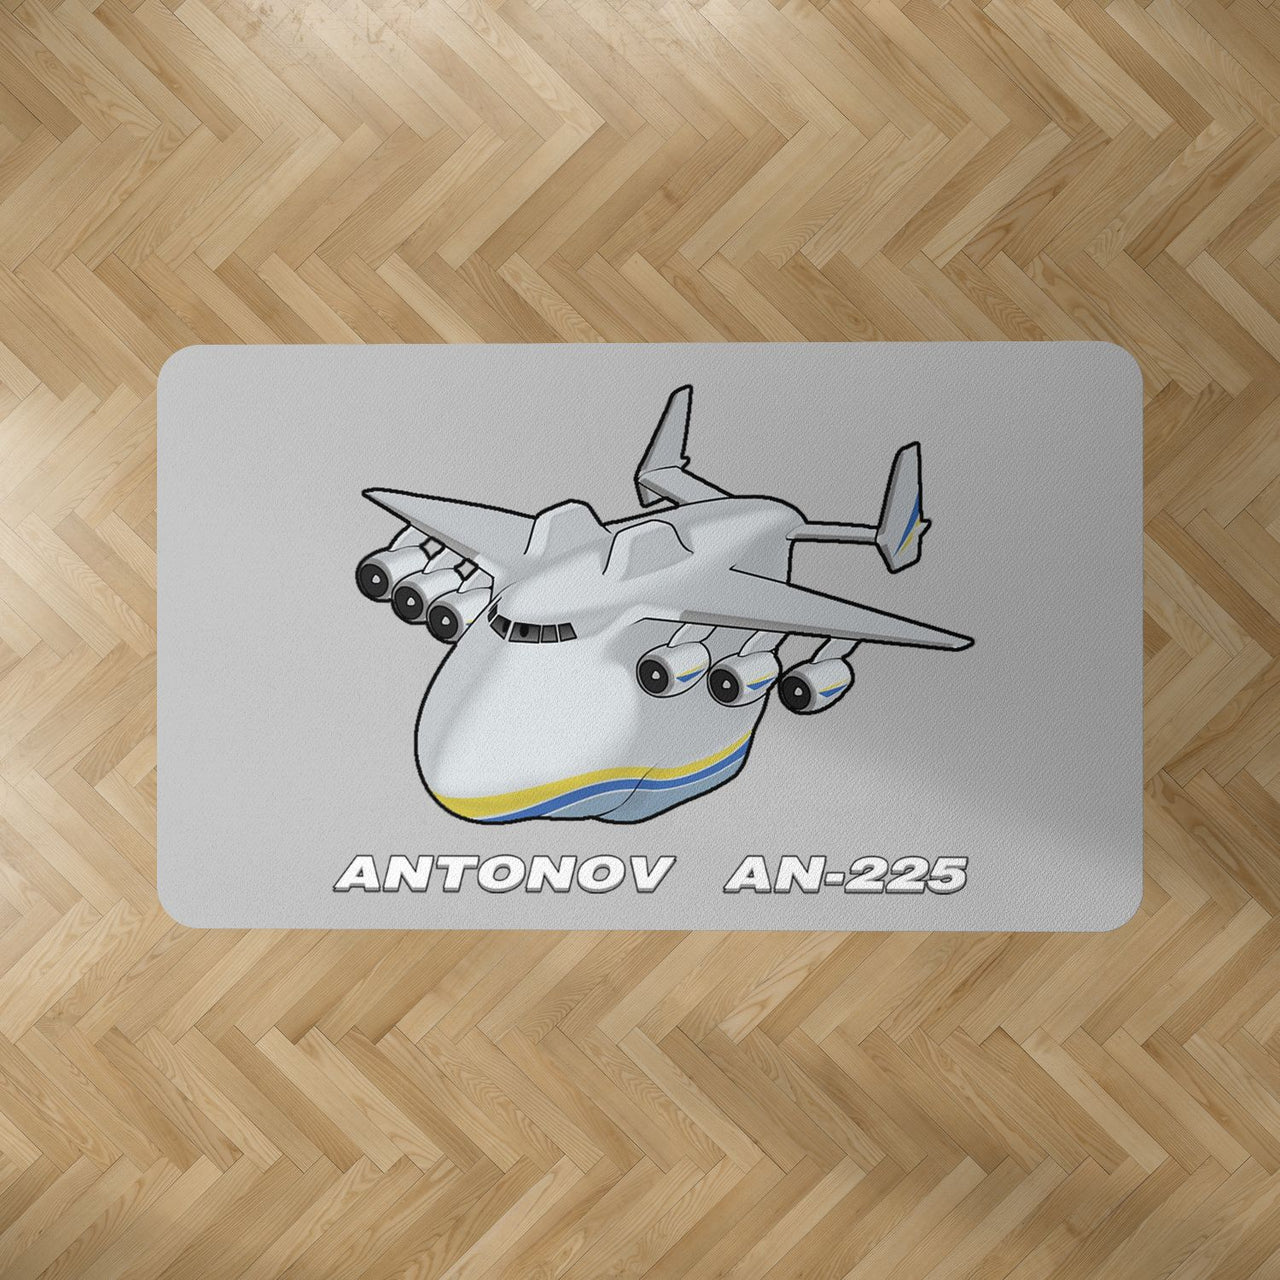 Antonov AN-225 (29) Designed Carpet & Floor Mats